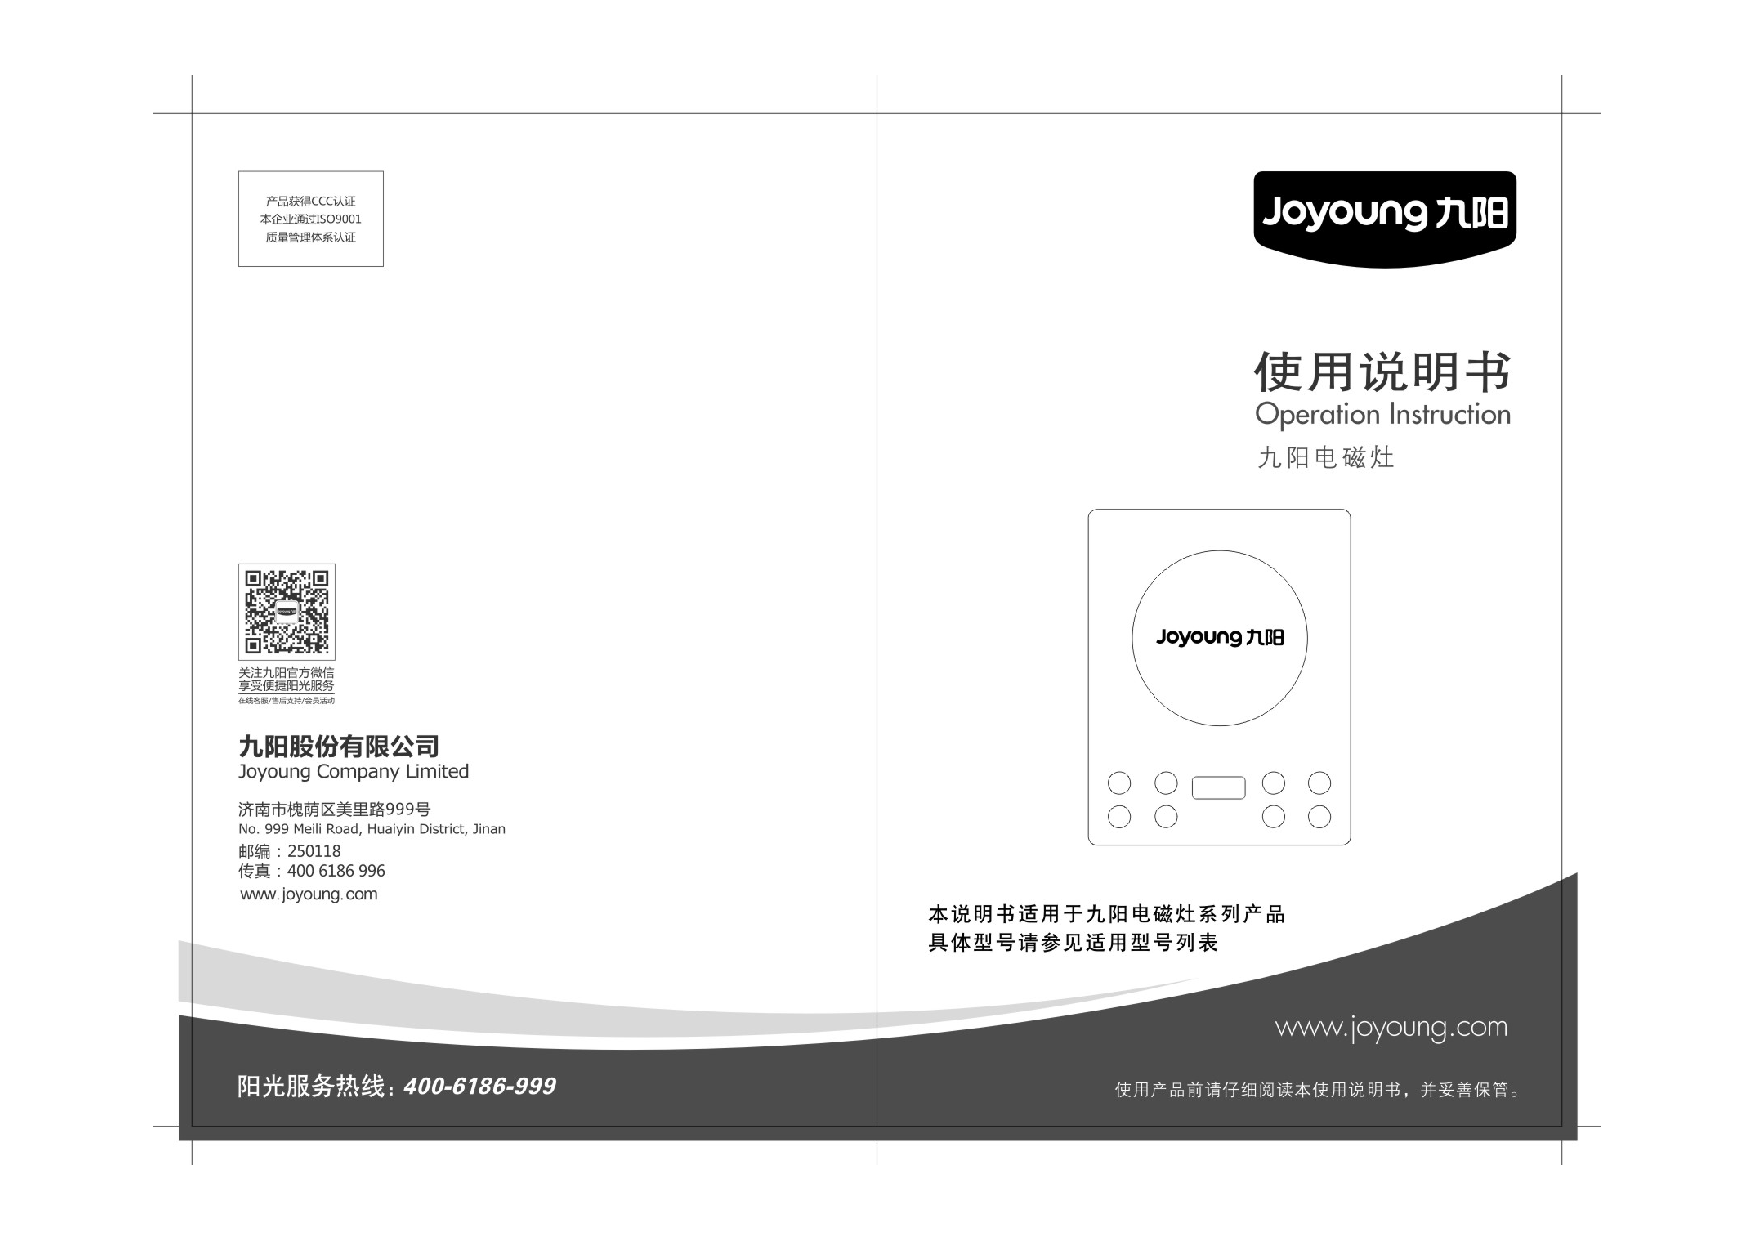 九阳 Joyyoung C21-DC001, JYC-21HEC05 使用说明书 封面